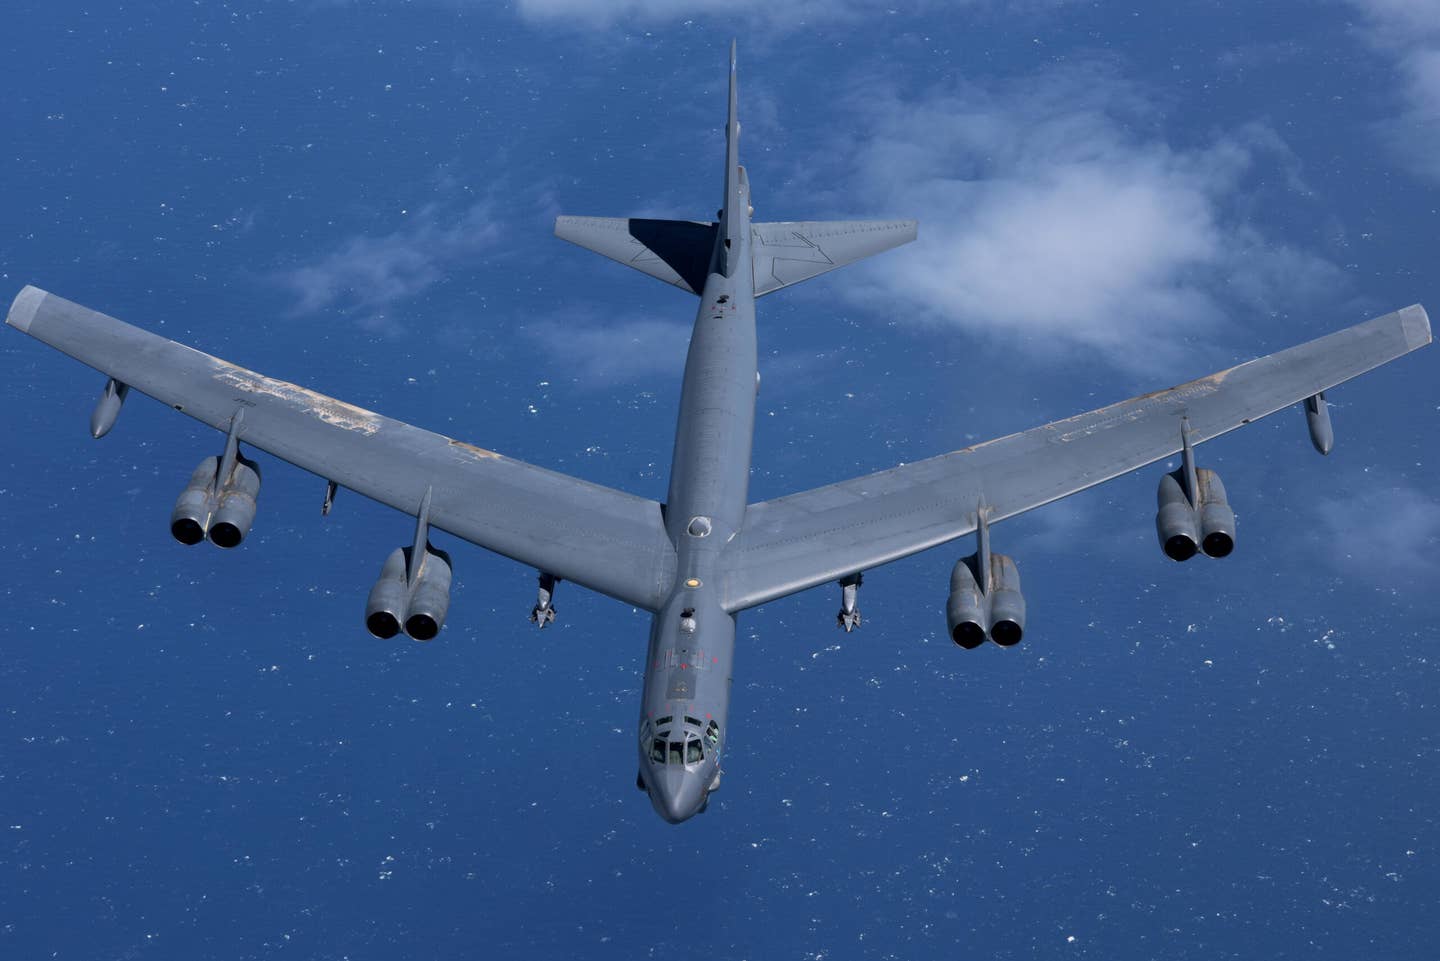 Another older picture showing B-52 with lighter-colored wing tips. <em>USAF</em>